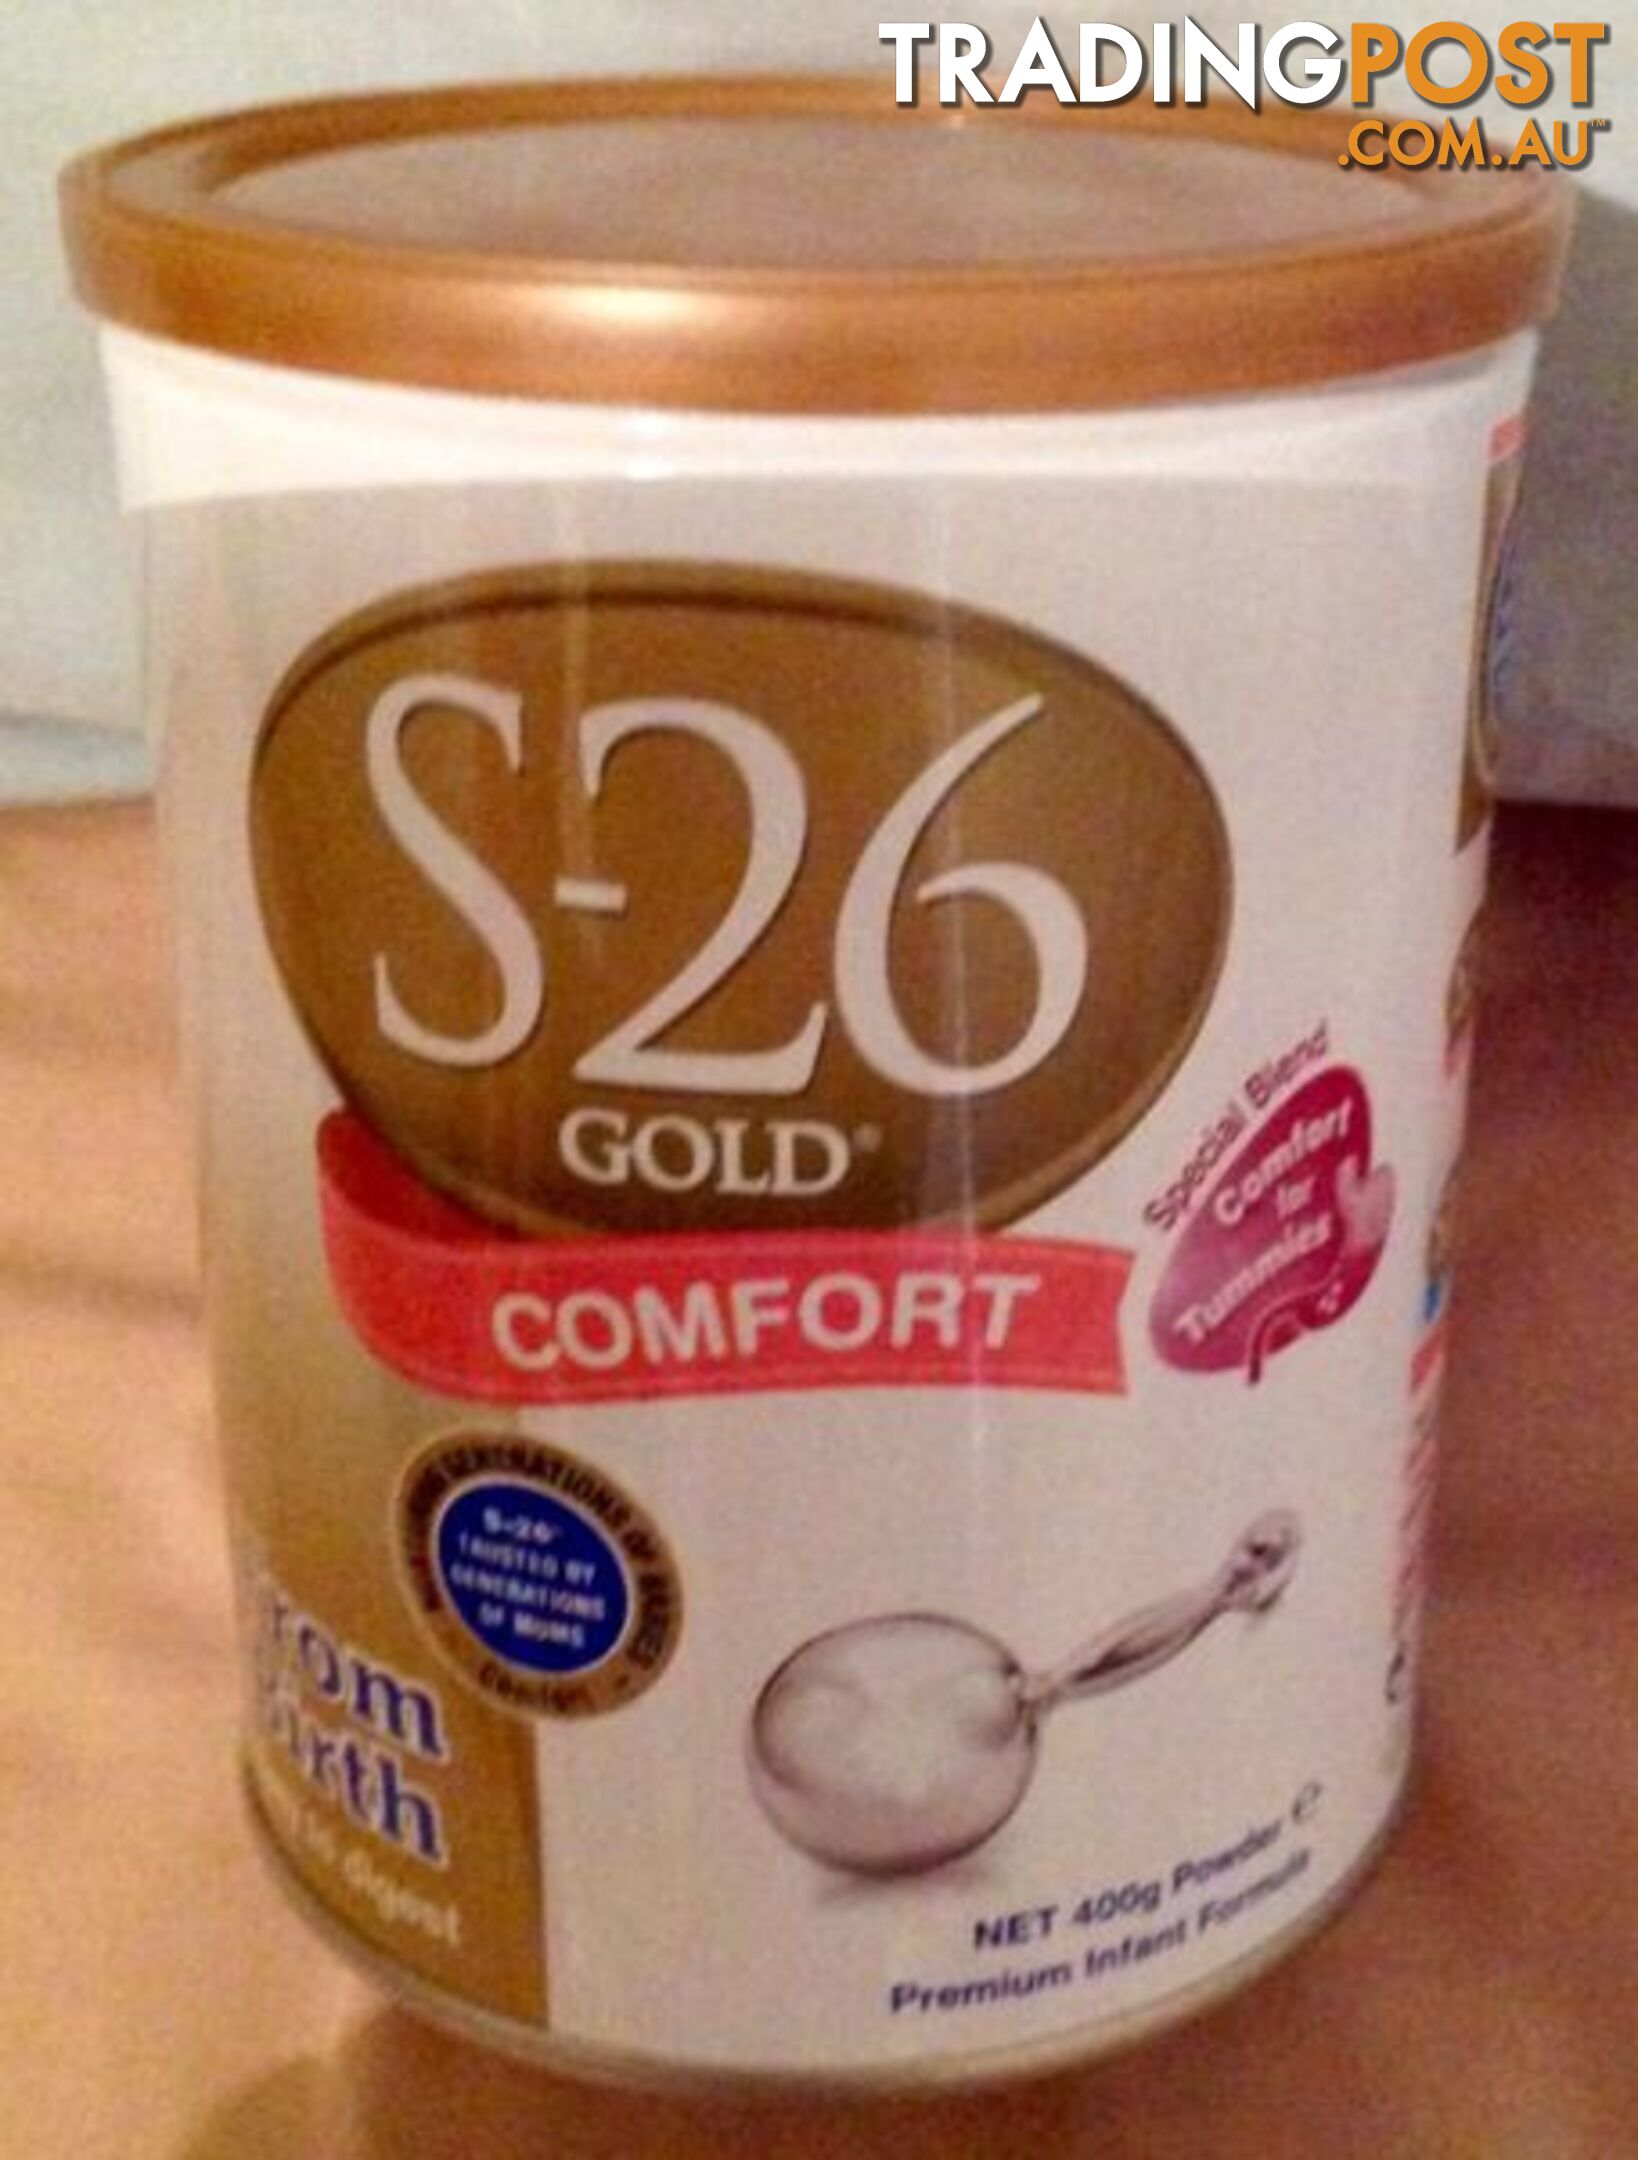 New S26 Gold Comfort Formula